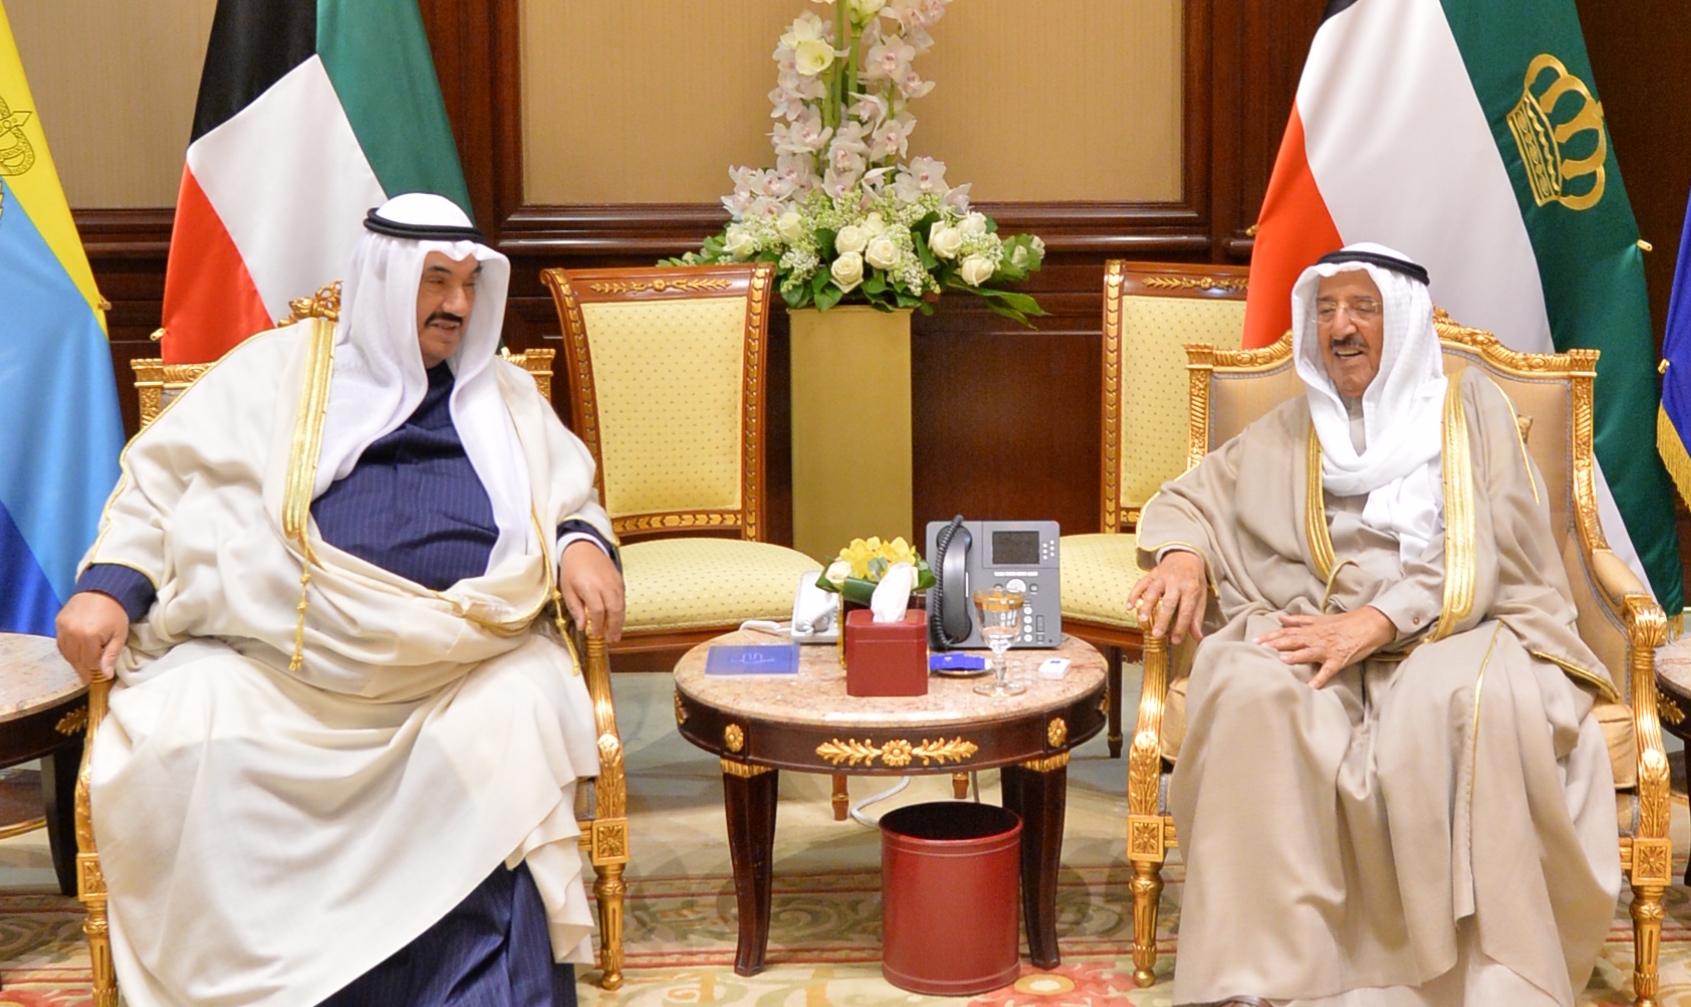 His Highness the Amir Sheikh Sabah Al-Ahmad Al-Jaber Al-Sabah receives His Highness Sheikh Naser Al-Mohammad Al-Ahmad Al-Sabah